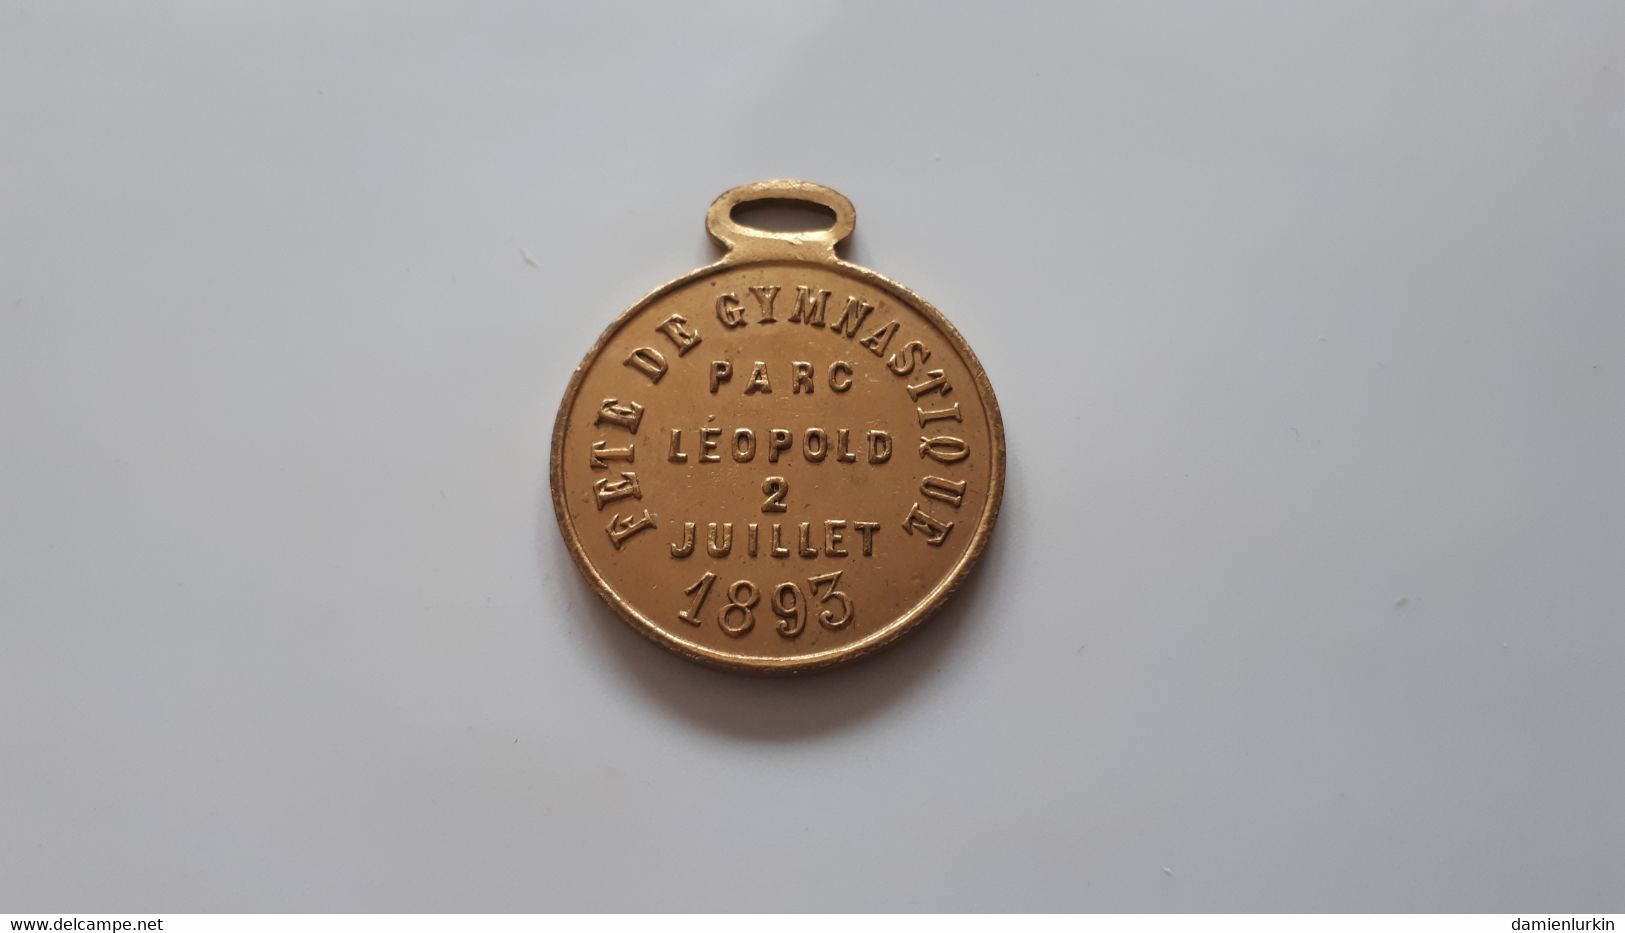 BELGIQUE LEOPOLD II MEDAILLE FETE DE LA GYMNASTIQUE PARC LEOPOLD 2 JUILLET 1893 34/28MM 7GR - Royal / Of Nobility